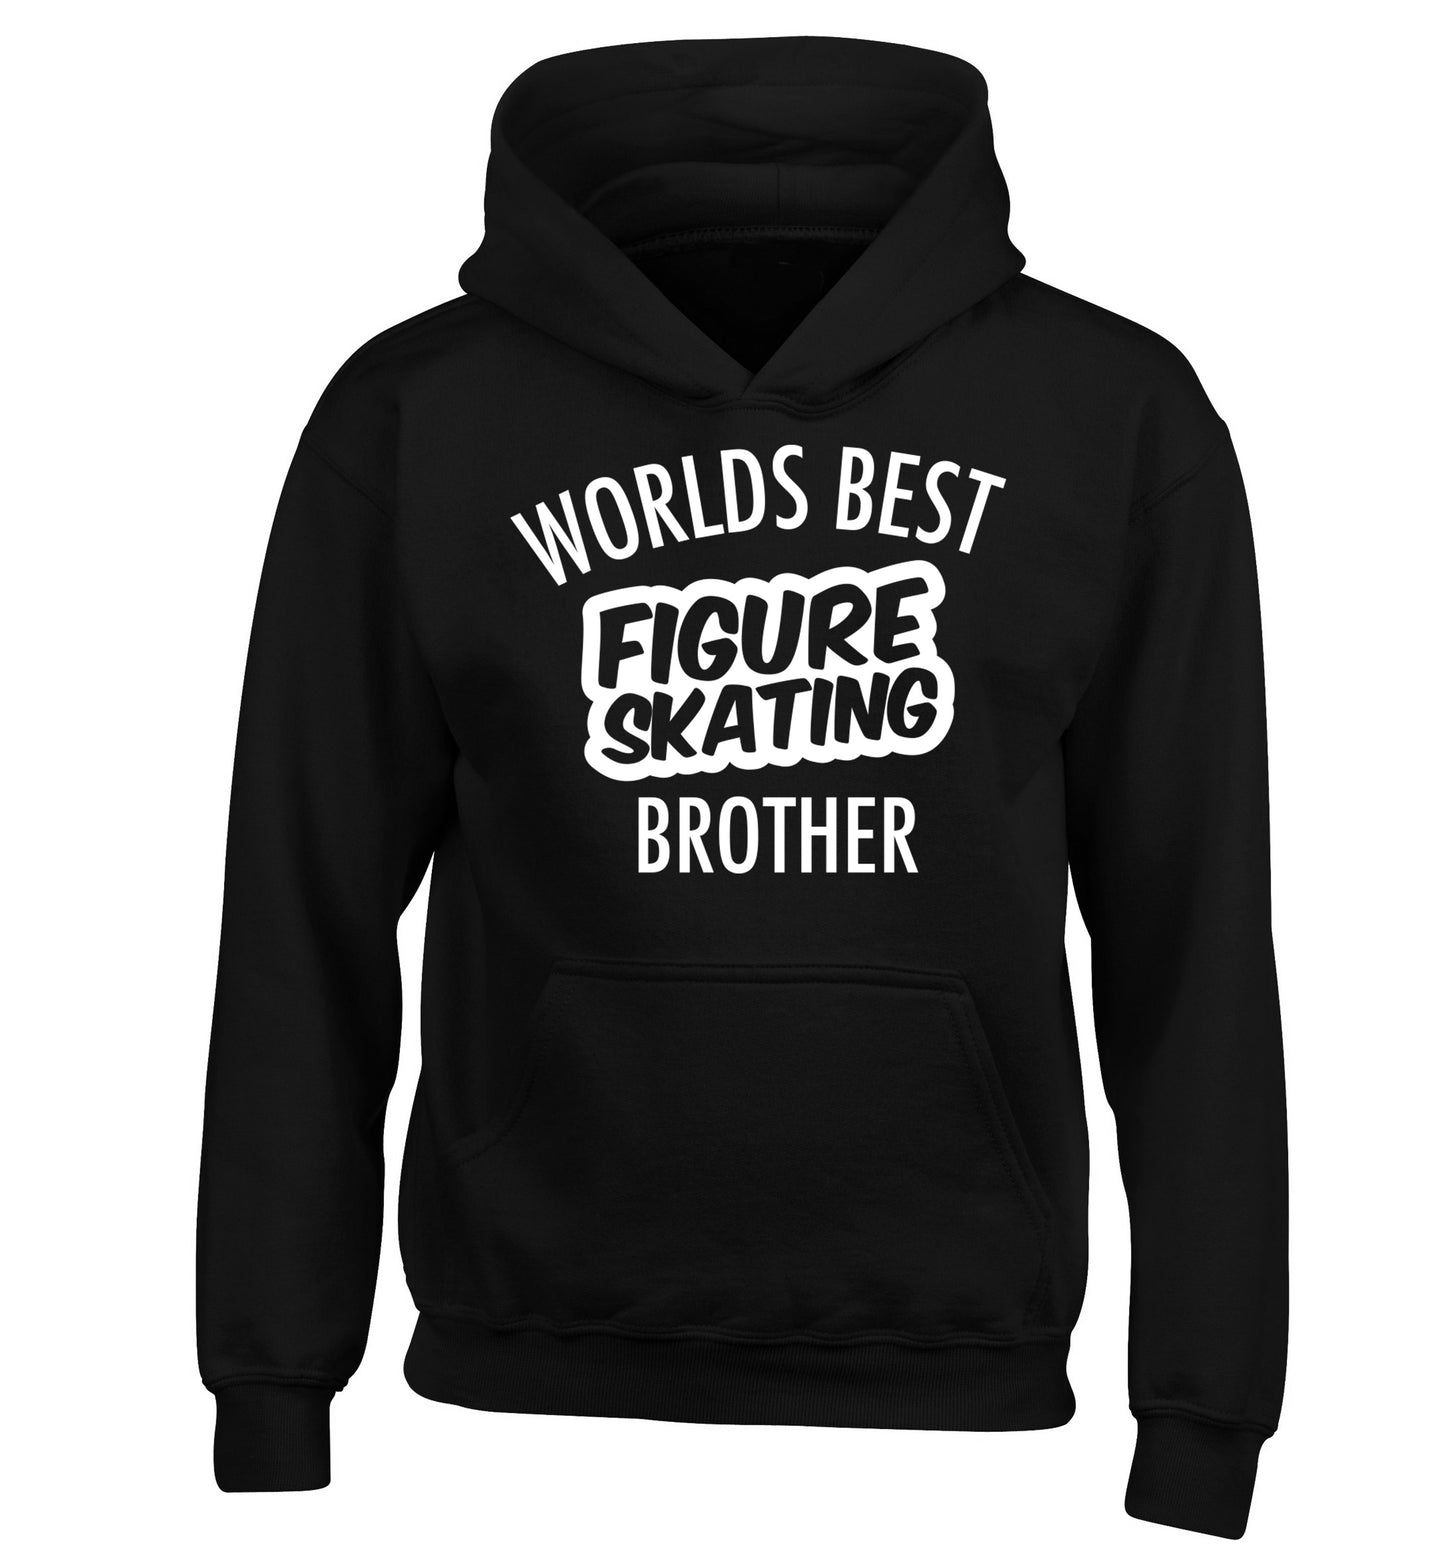 Worlds best figure skating brother children's black hoodie 12-14 Years